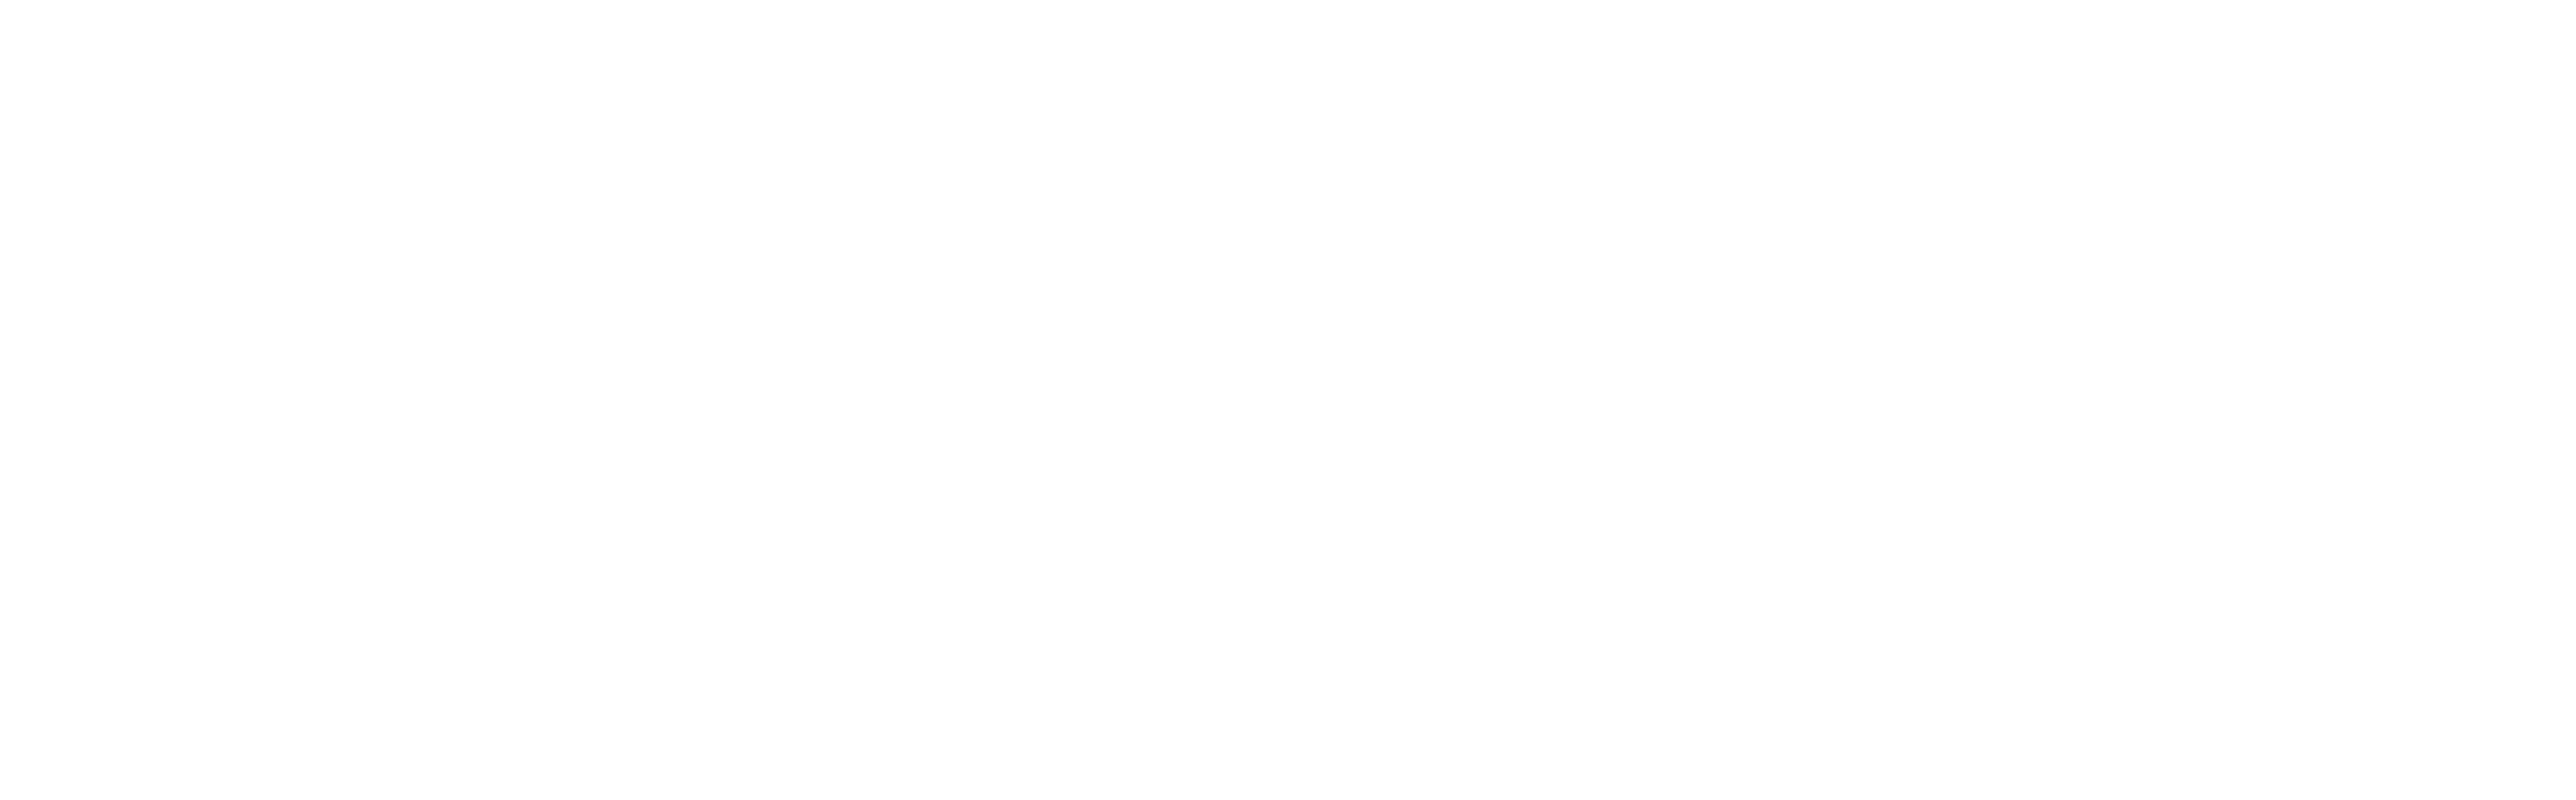 CHURCH PROJECT